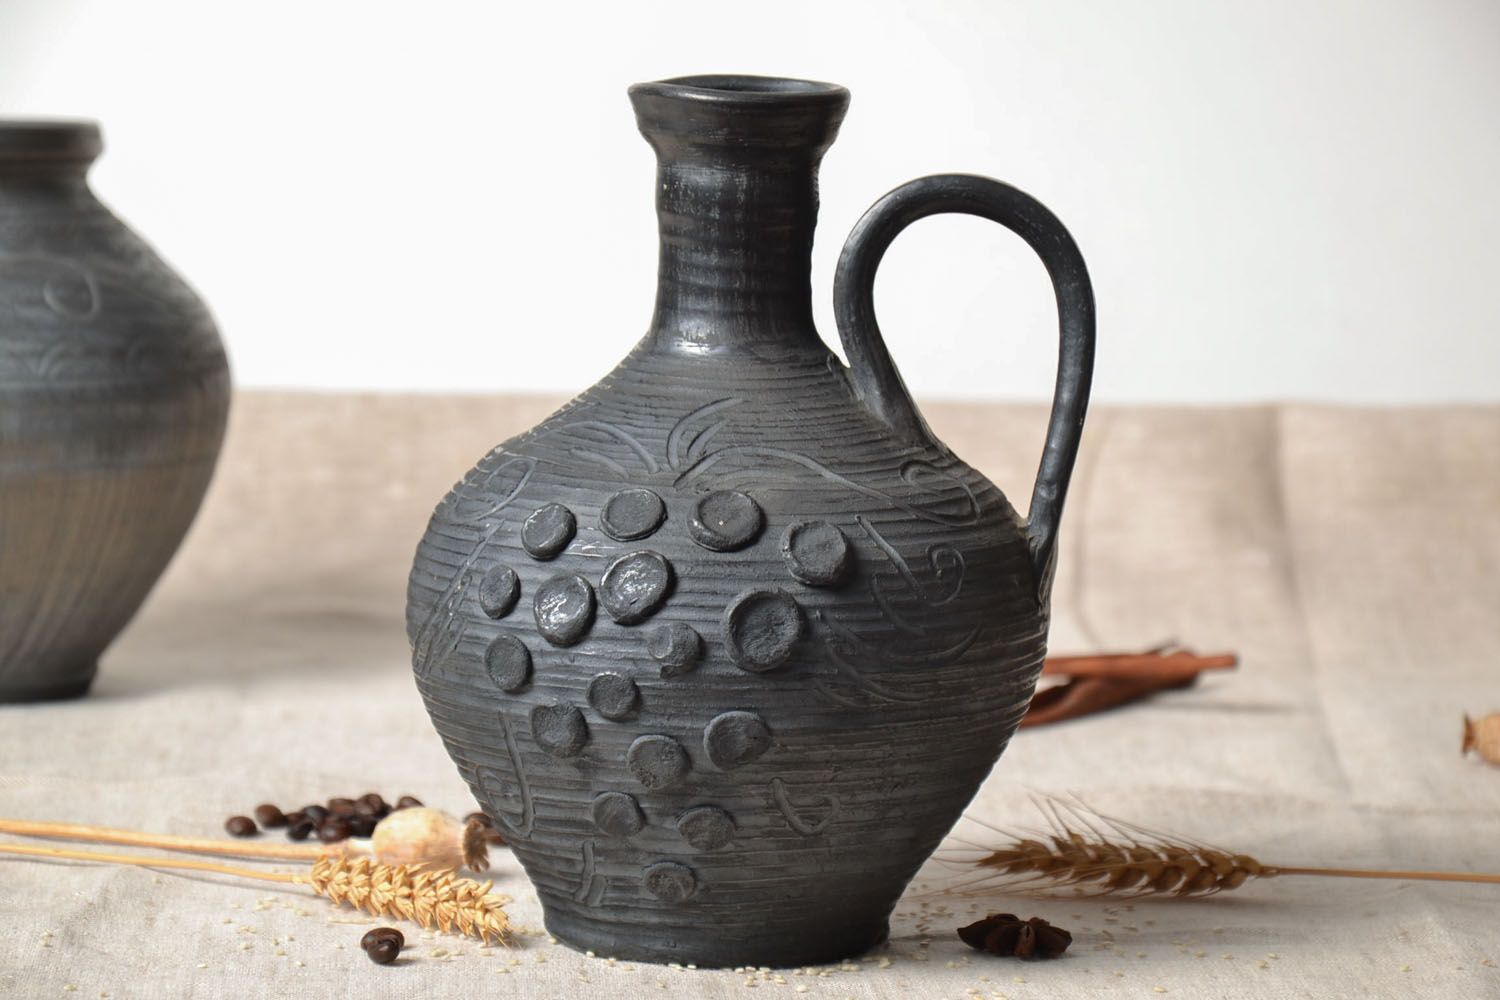 40 oz black wine ceramic handmade wine carafe with handle 2,9 lb photo 1